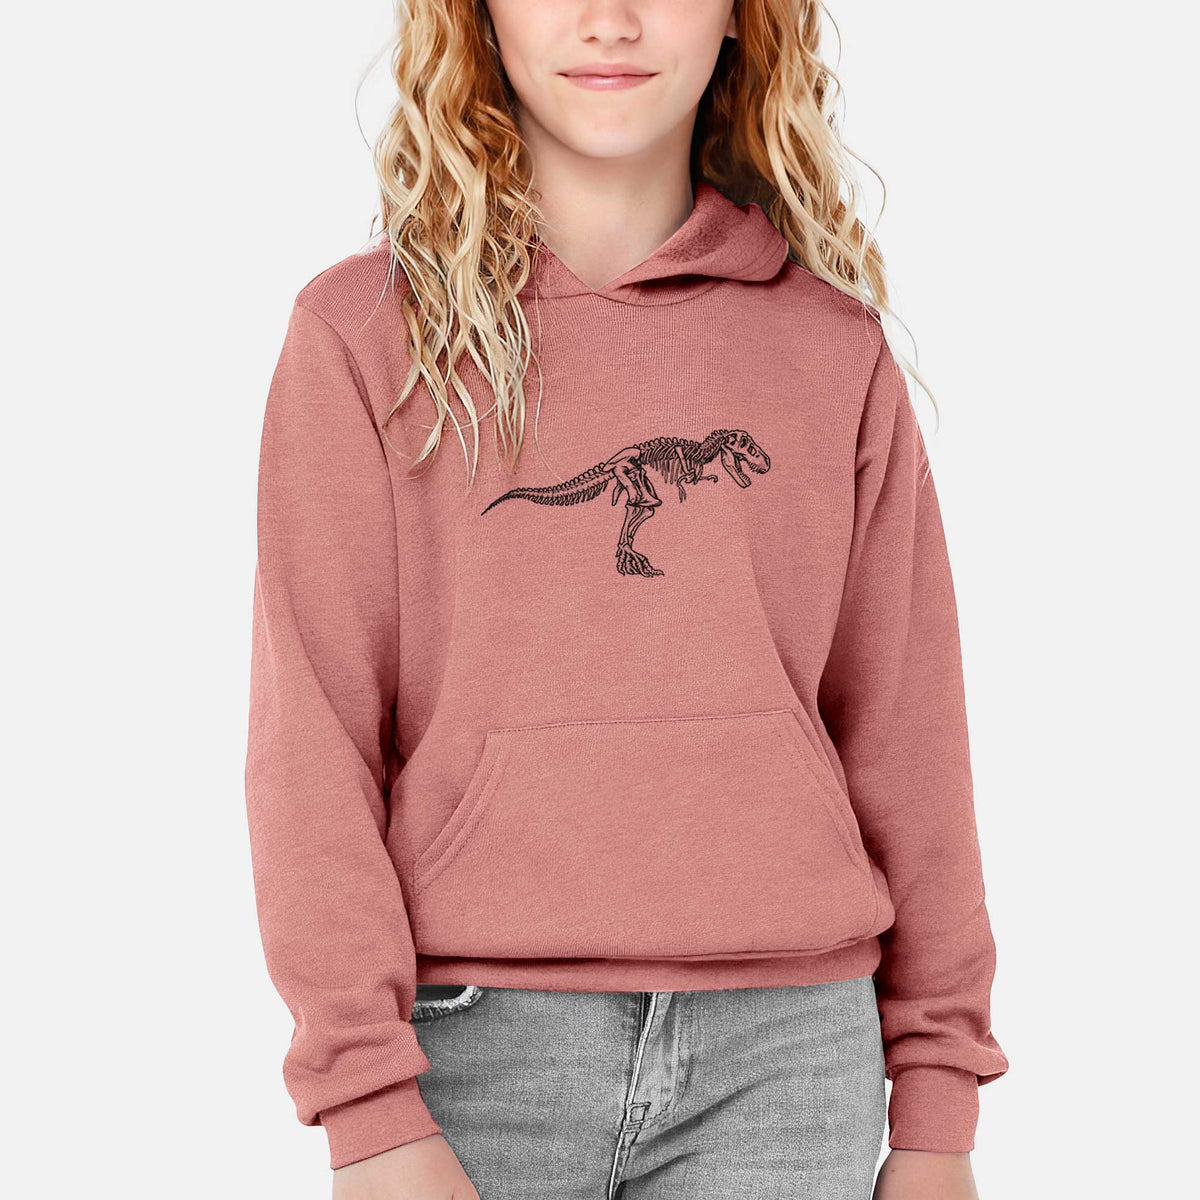 Tyrannosaurus Rex Skeleton - Youth Hoodie Sweatshirt